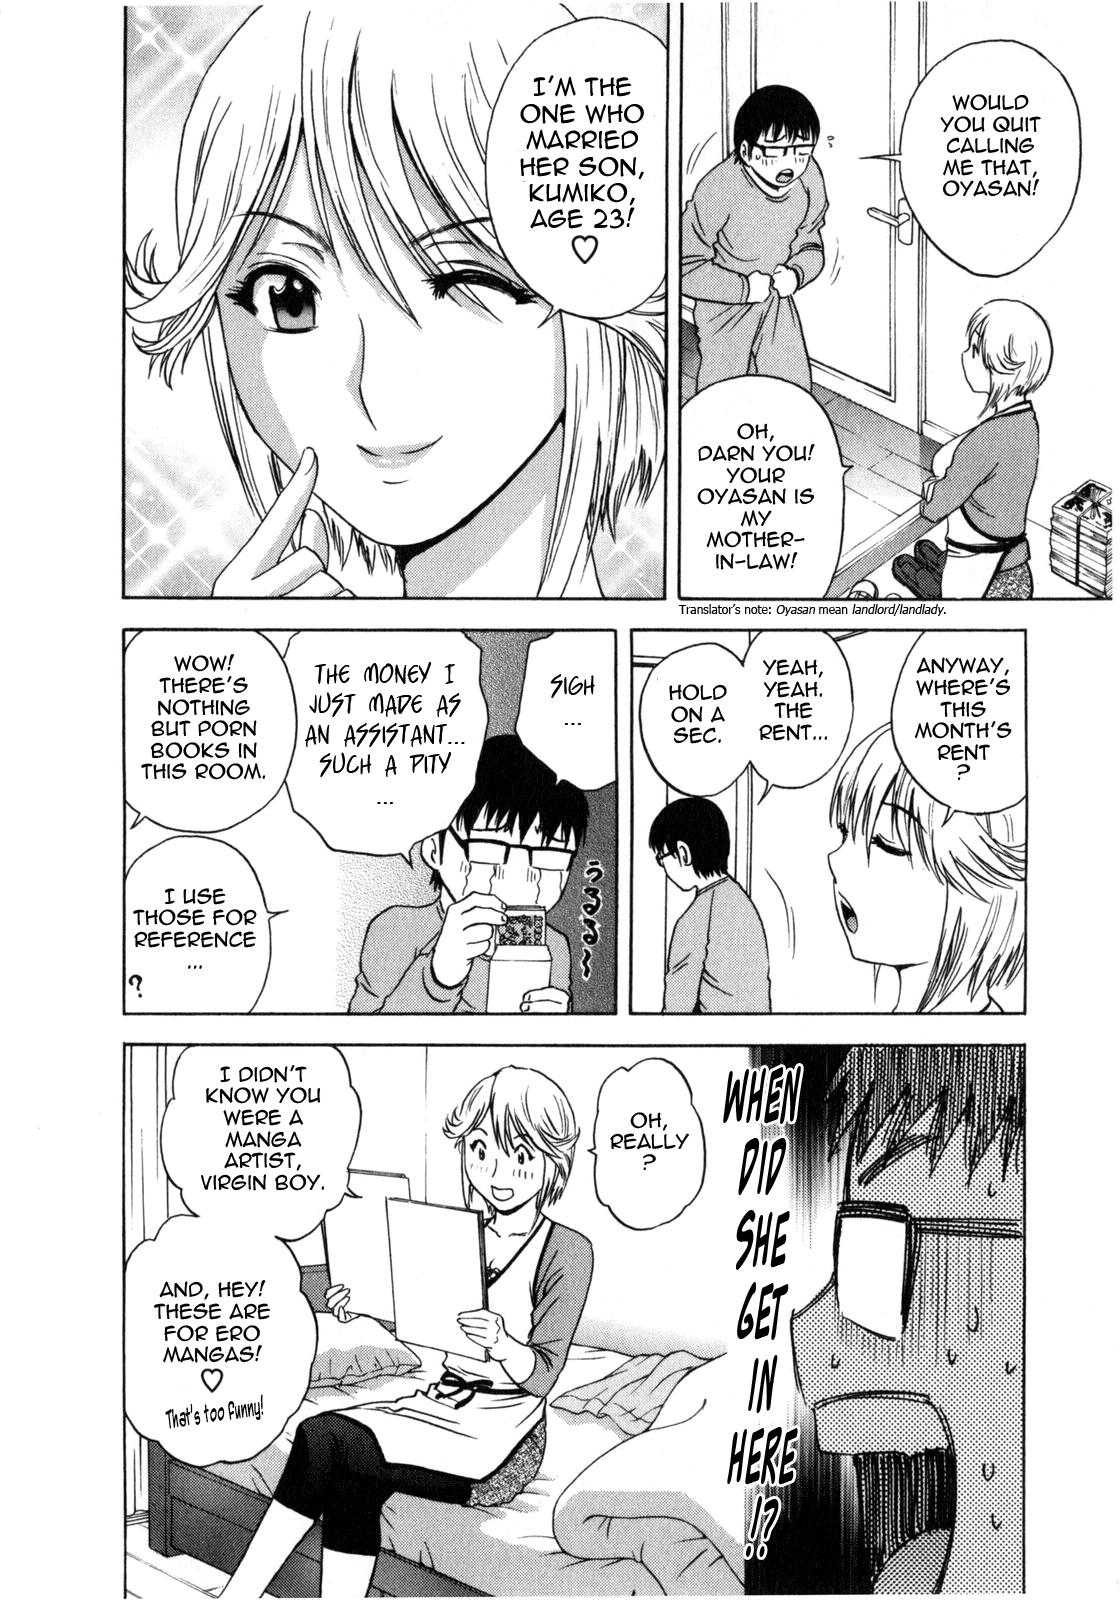 [Hidemaru] Life with Married Women Just Like a Manga 1 - Ch. 1-7 [English] {Tadanohito} 29